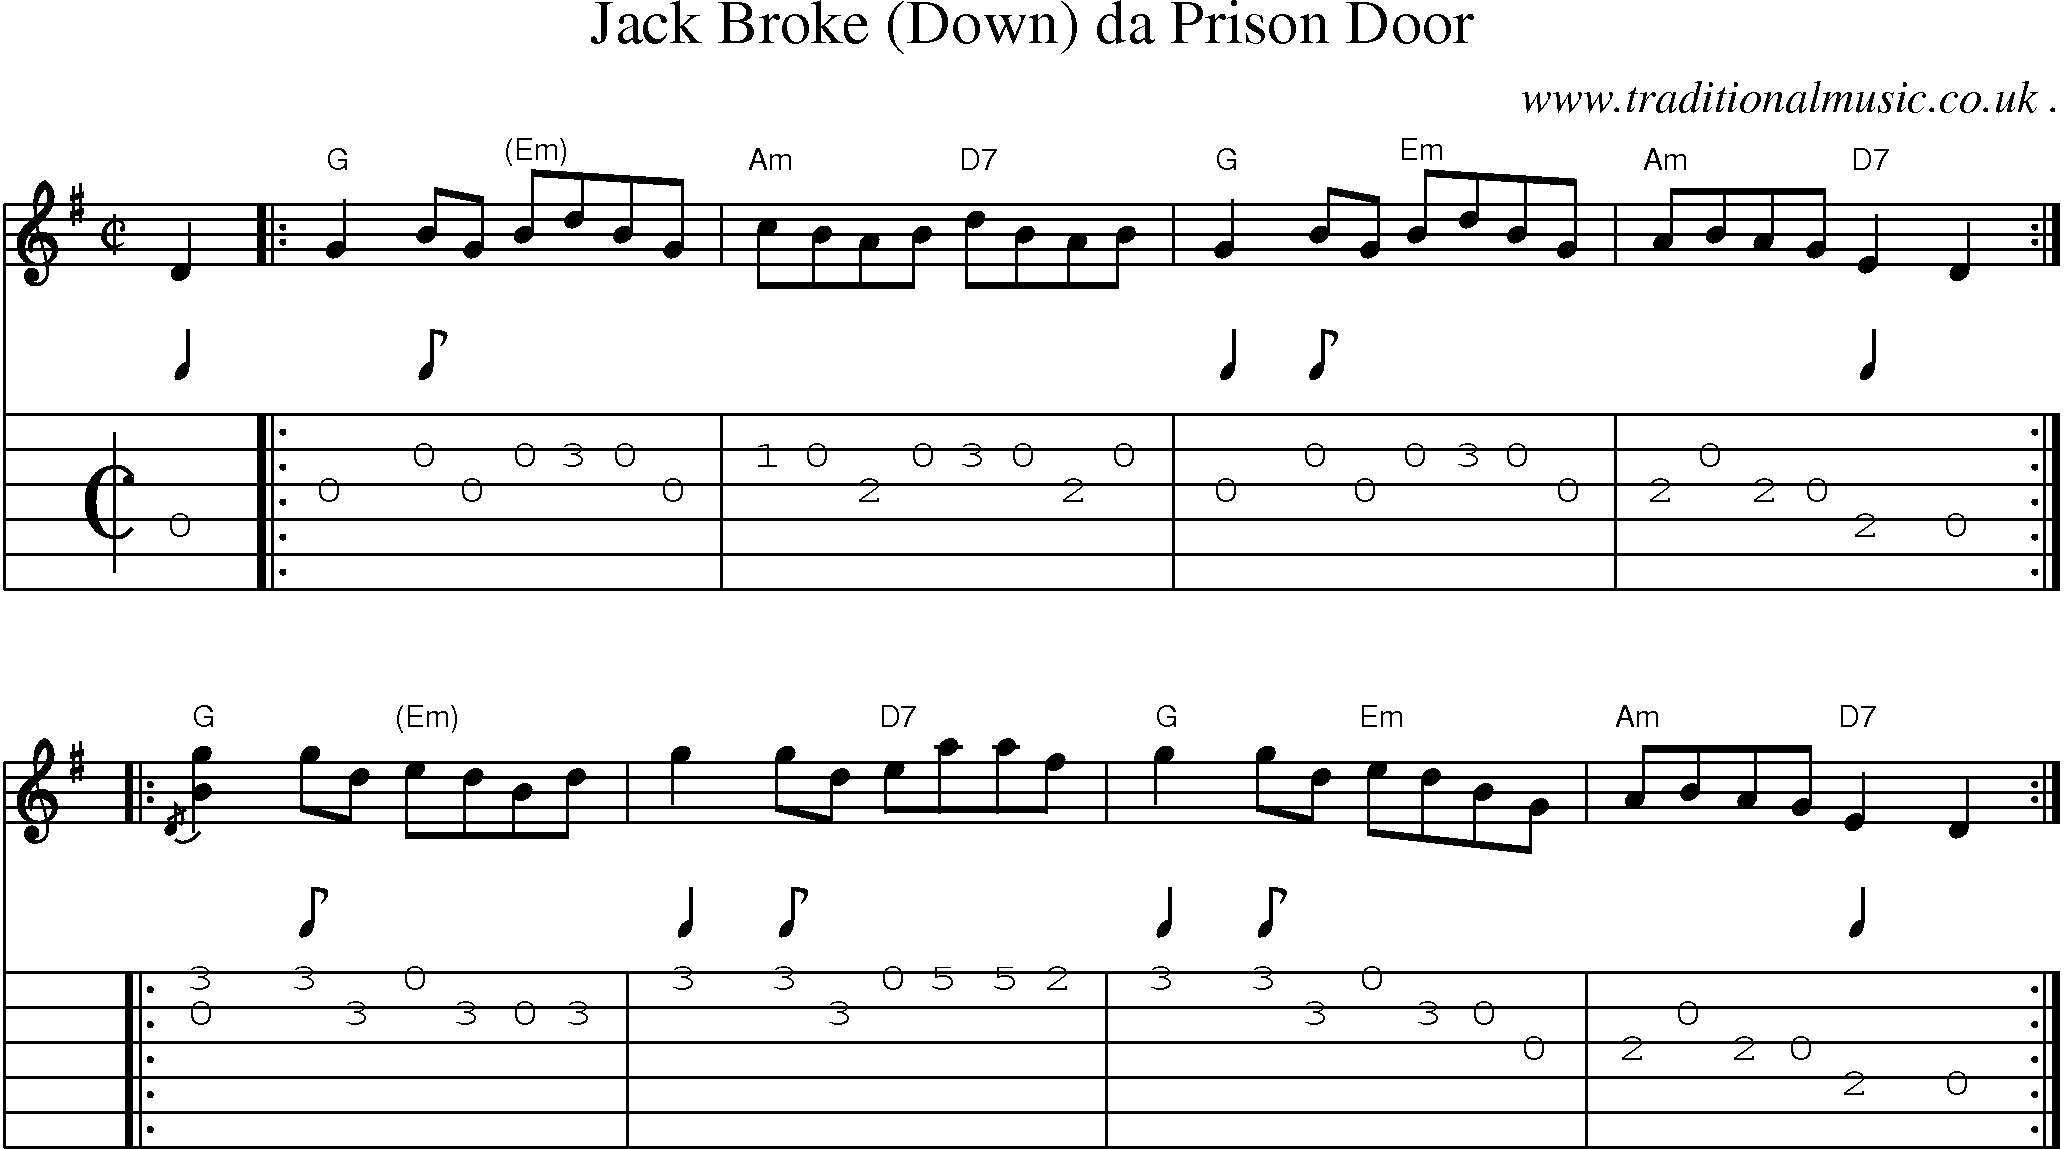 Sheet-music  score, Chords and Guitar Tabs for Jack Broke Down Da Prison Door